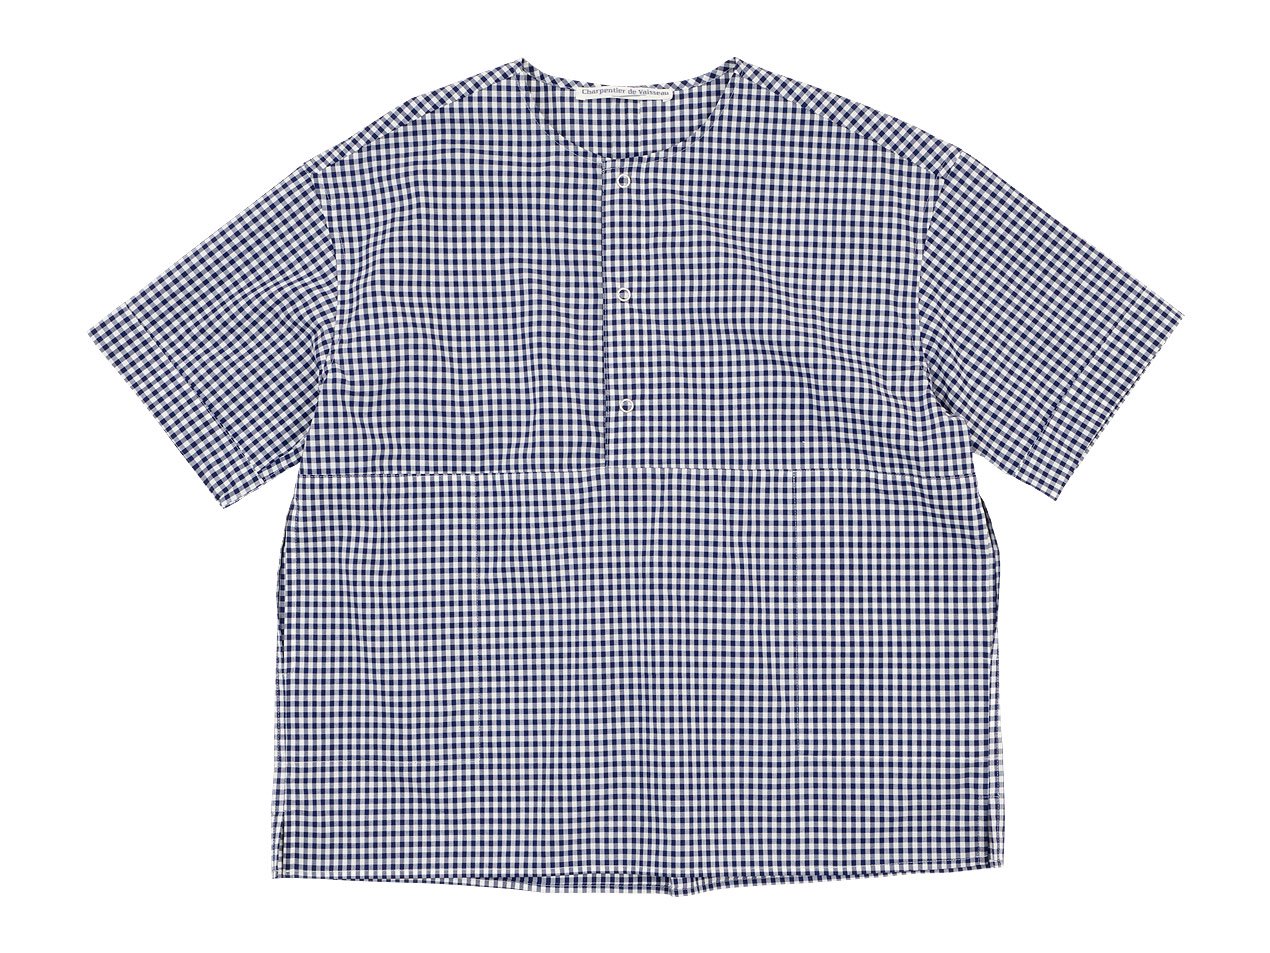 Charpentier de Vaisseau Selma Front Button Short Sleeve Shirts NAVY CHECK